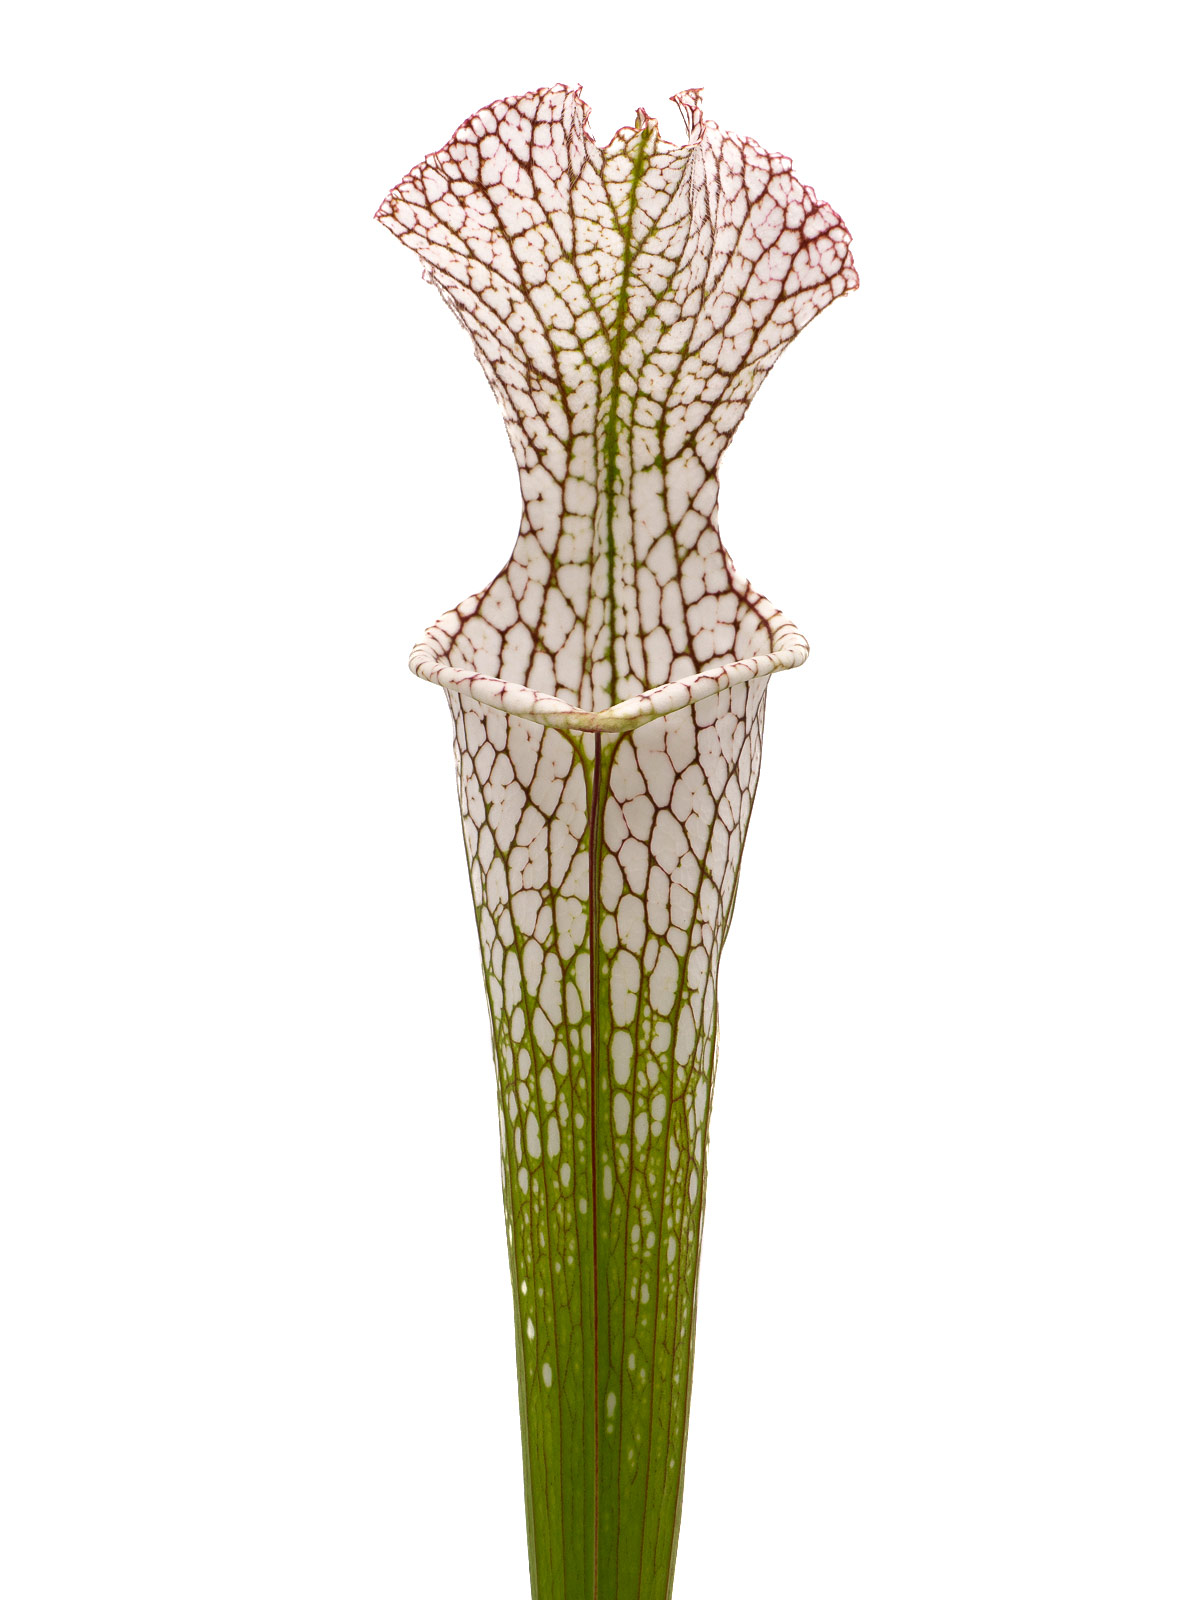 S. leucophylla - very tall grower, EEE 2011